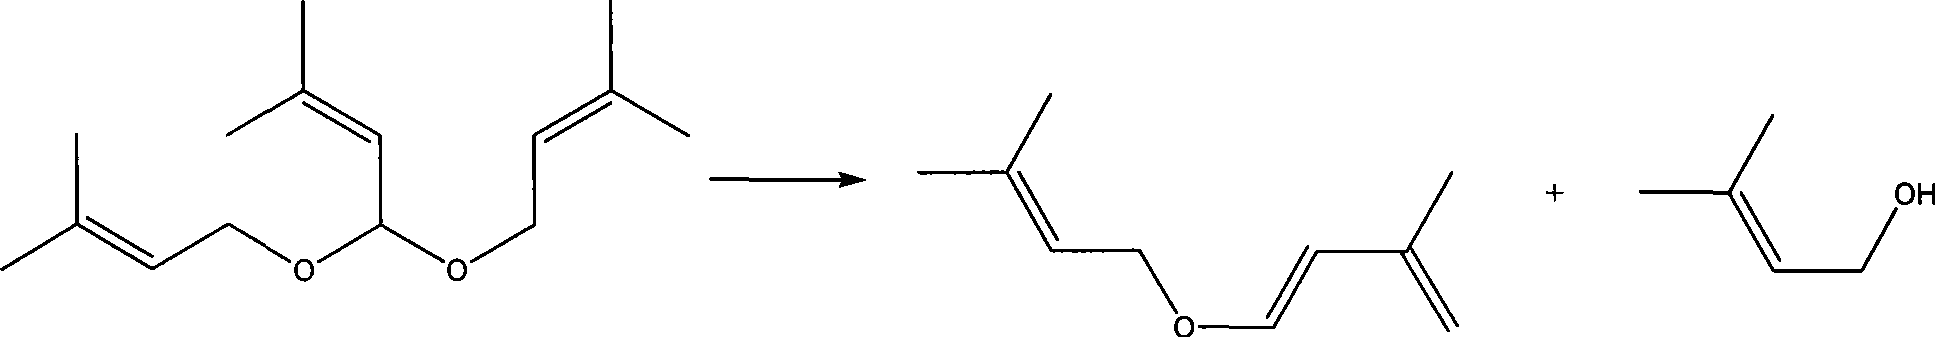 Continuous gas phase reaction method of isoprene-3-methyl butan-2-alkenyl ether